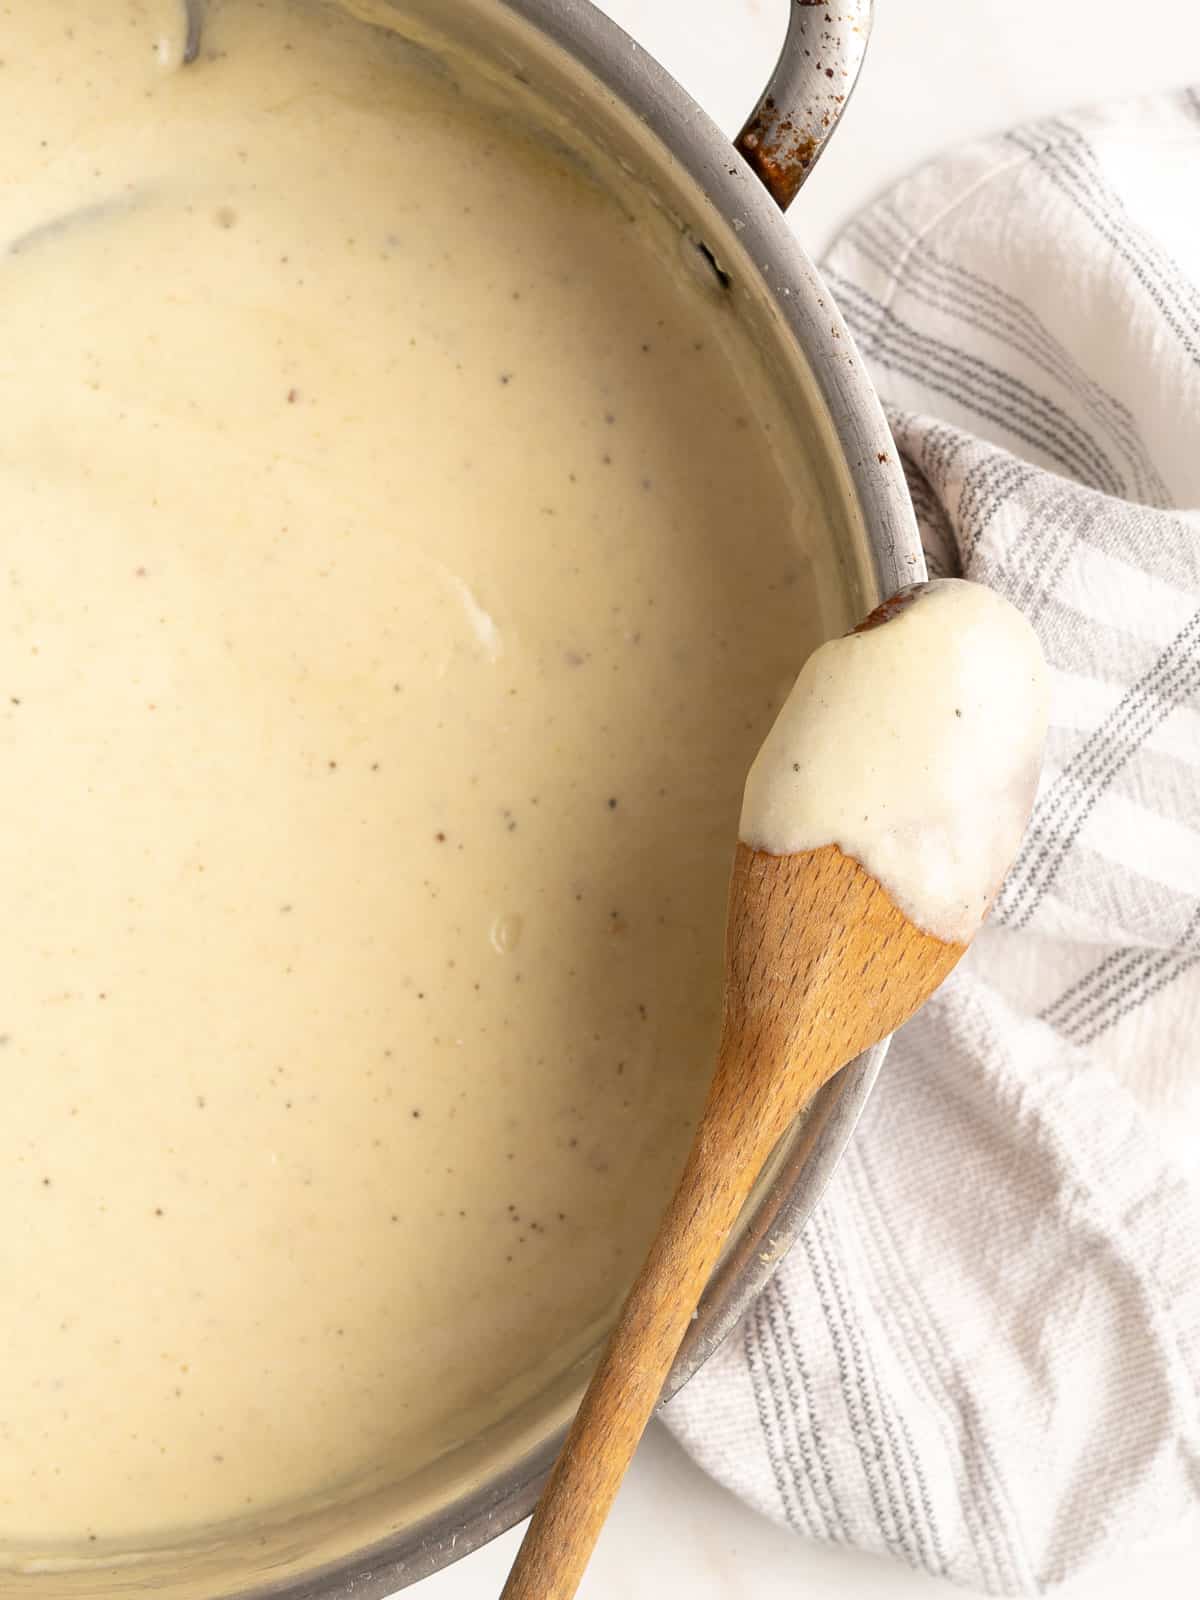 Creamy alfredo sauce in a pot.